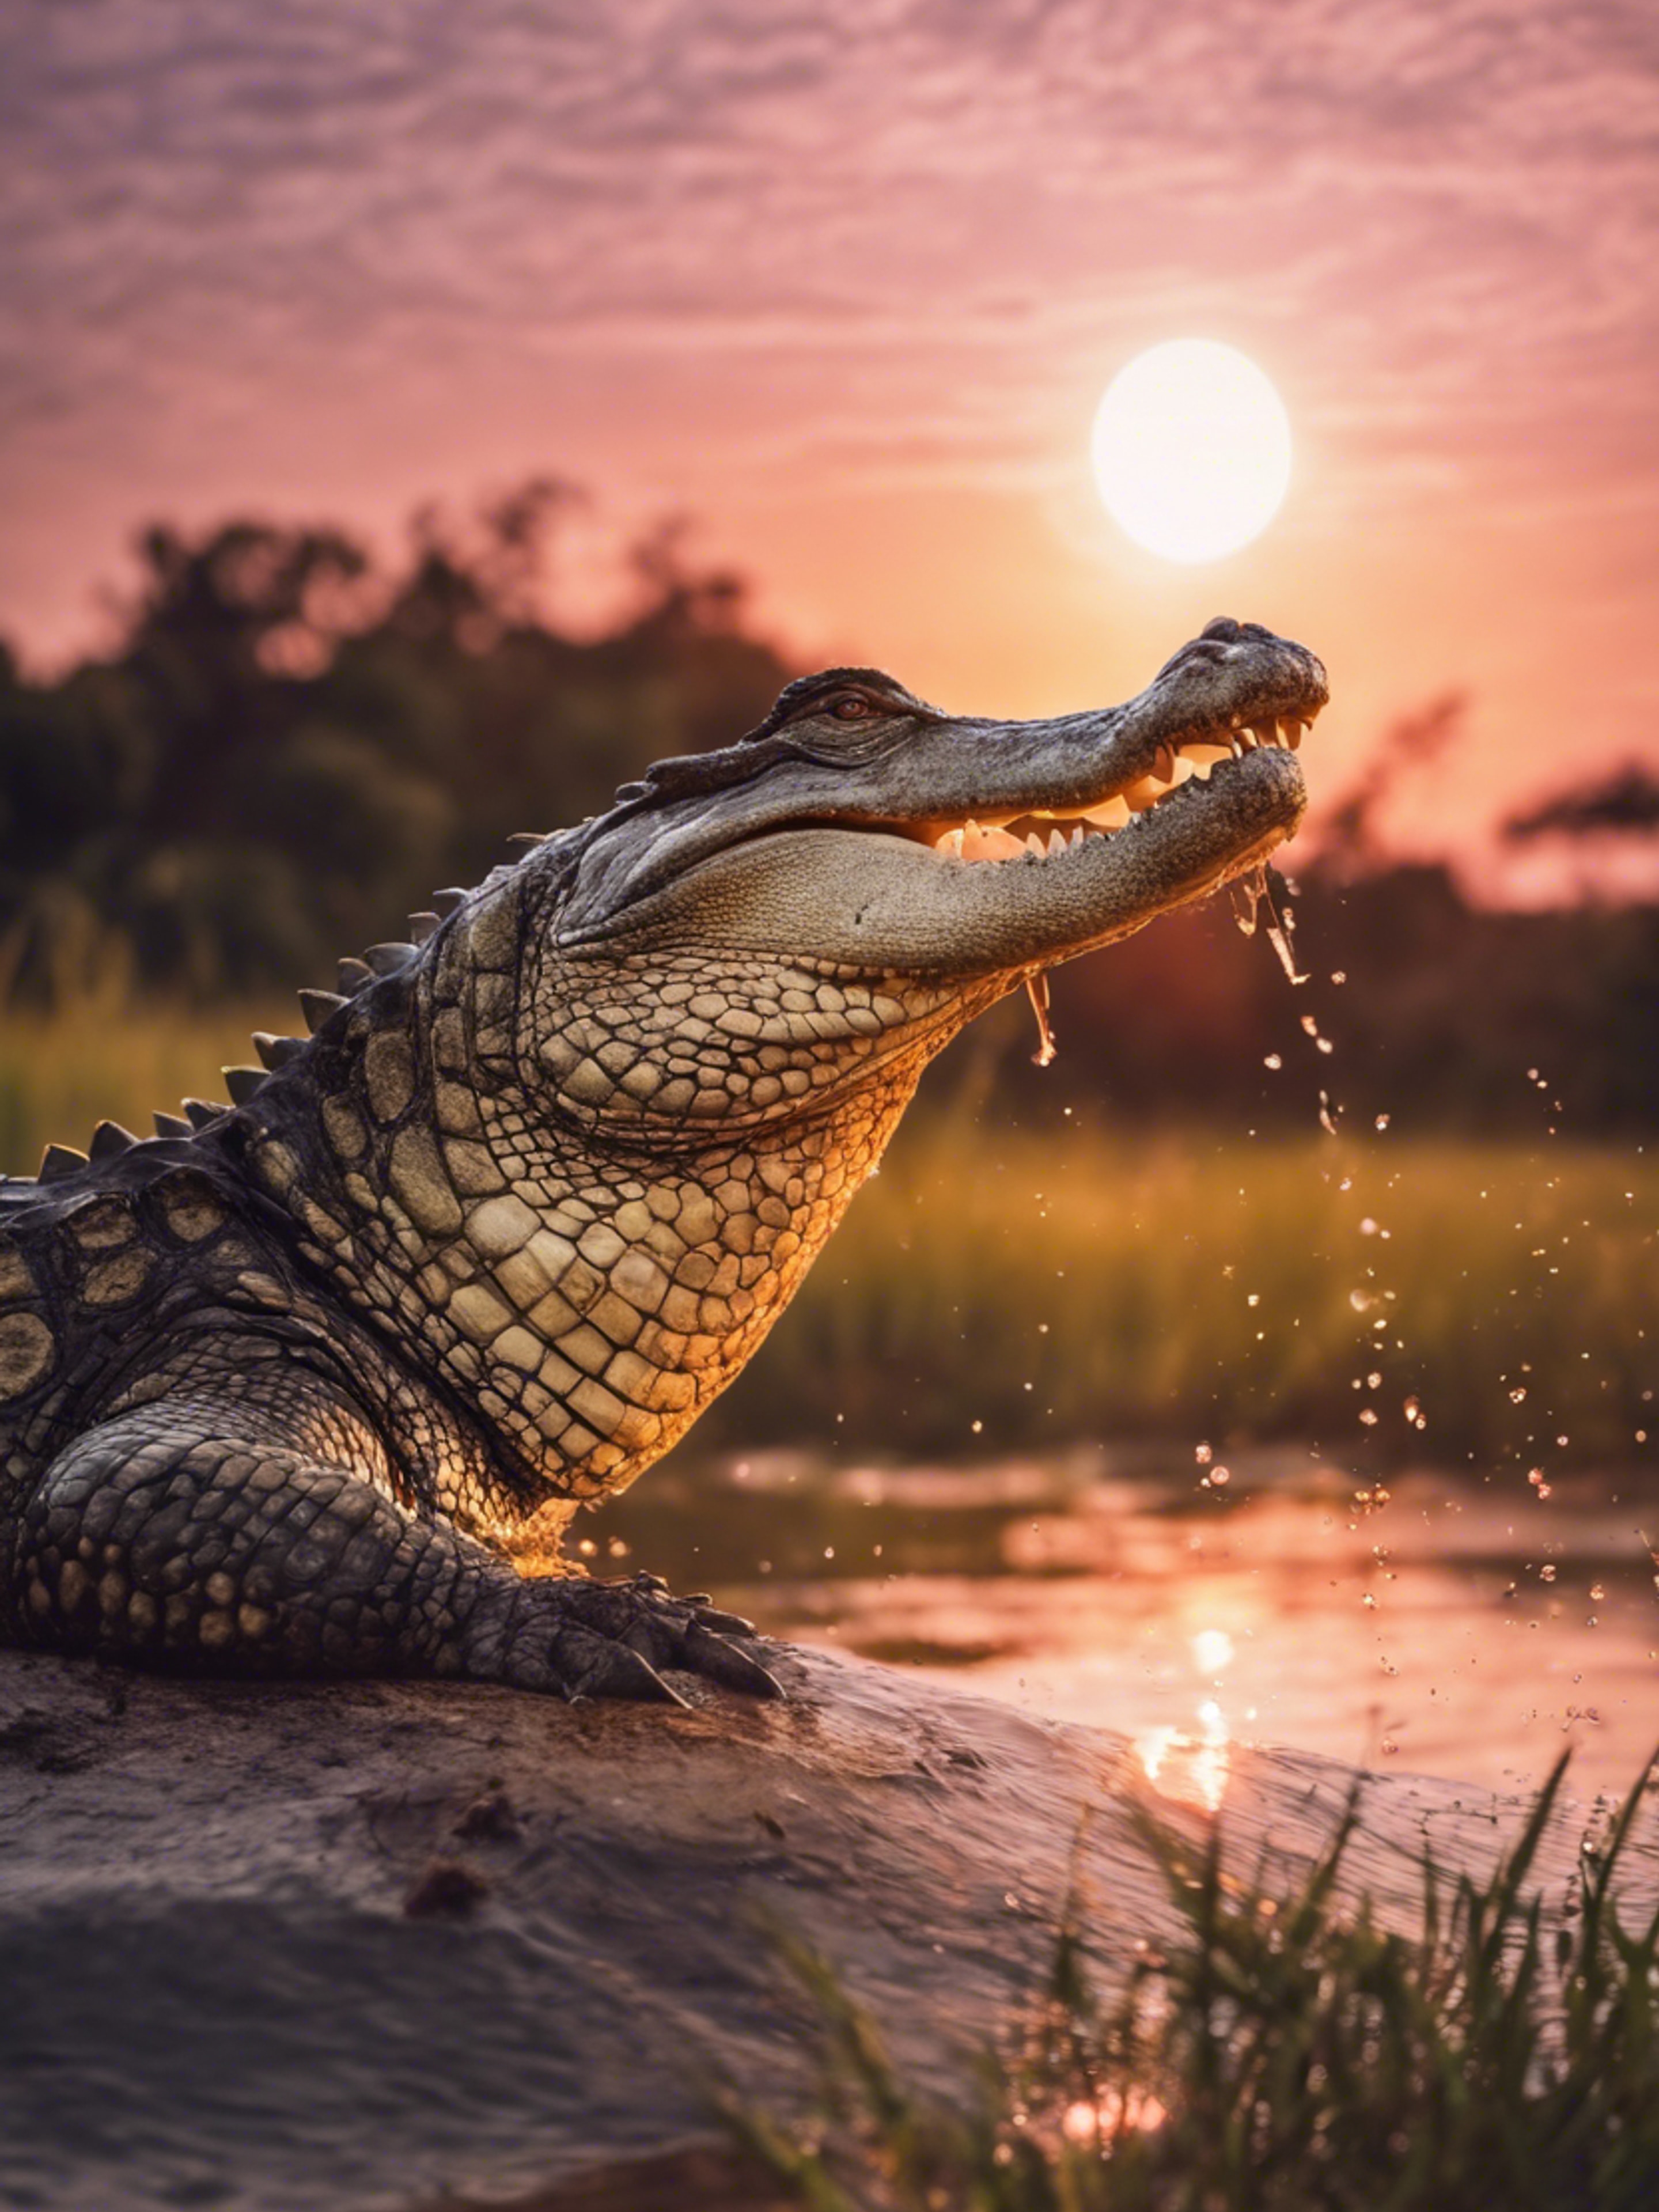 A beautiful sunrise with a crocodile breaking the surface under a rosy sky. Papel de parede[8e947b6adb0246b9980f]